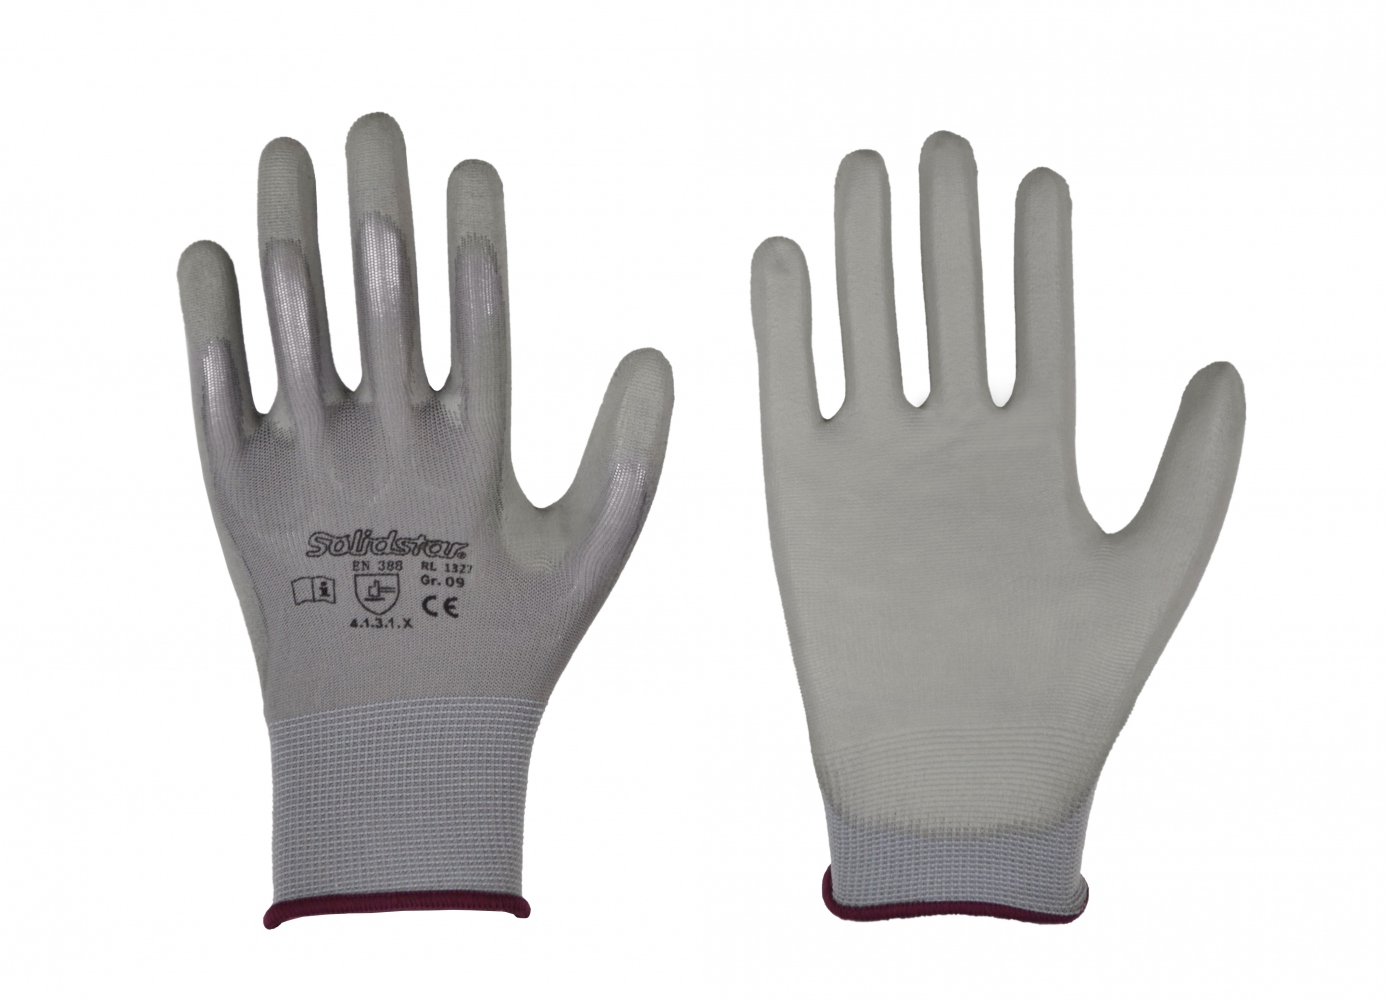 pics/Leipold/Handschuhe/solidstar/solidstar-1327-nylon-fine-knit-safety-gloves-pu-coated-grey-en388.jpg